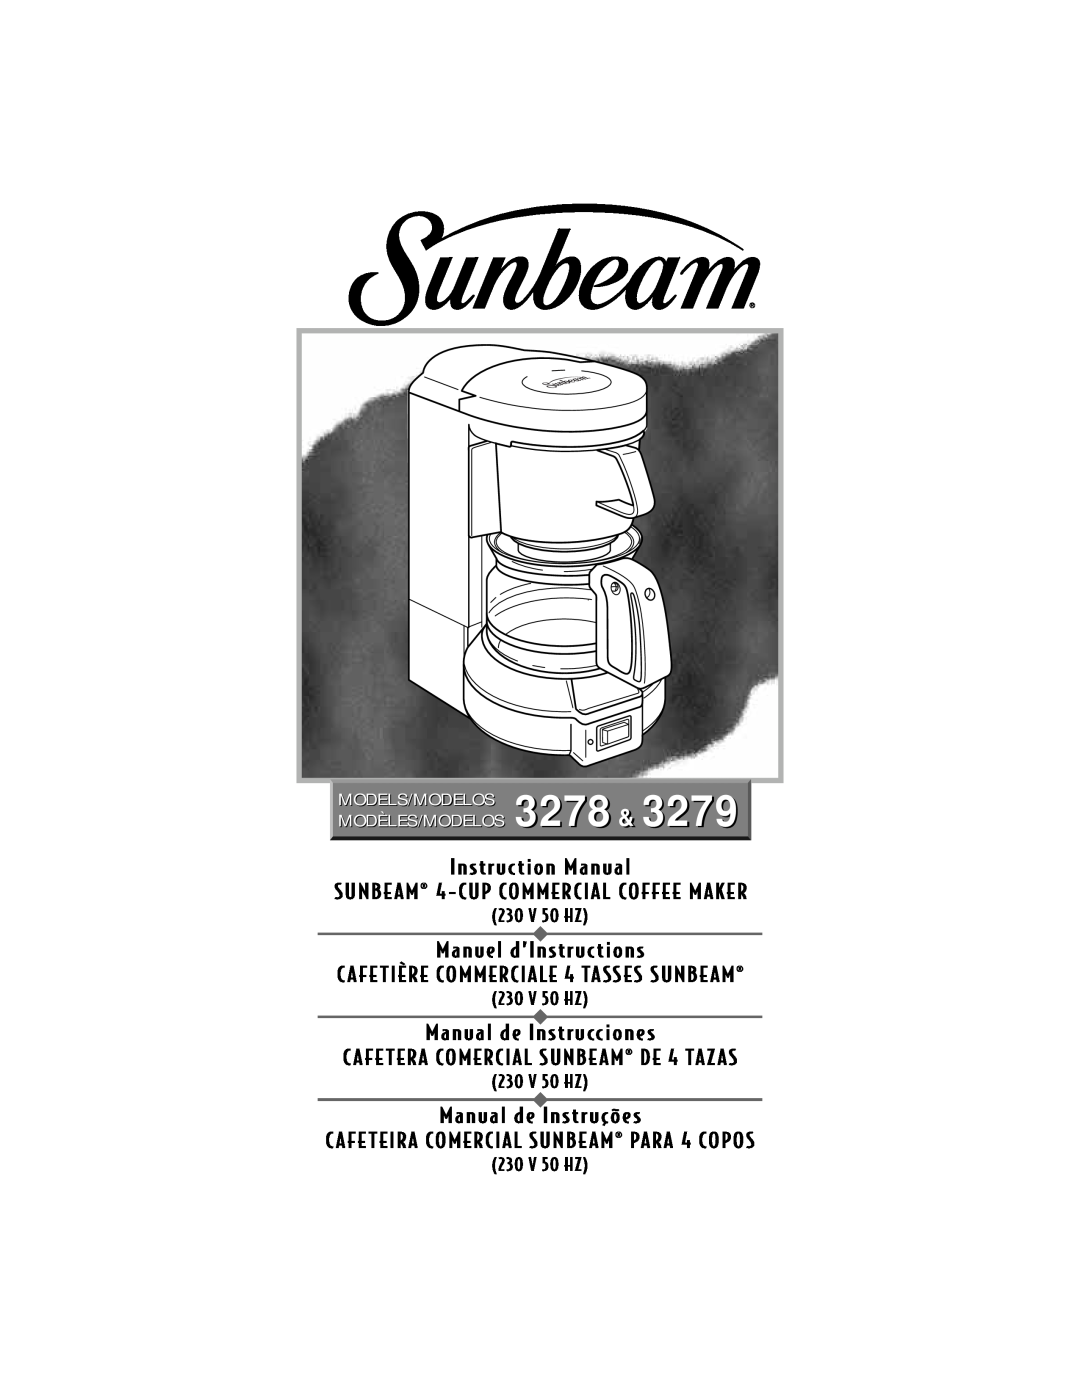 Sunbeam 3279 instruction manual SUNBE AM¨ 4 - CUP COMMERCIAL COFFEE MAKER, Manuel dÕInstructions, Manual de Instrucciones 